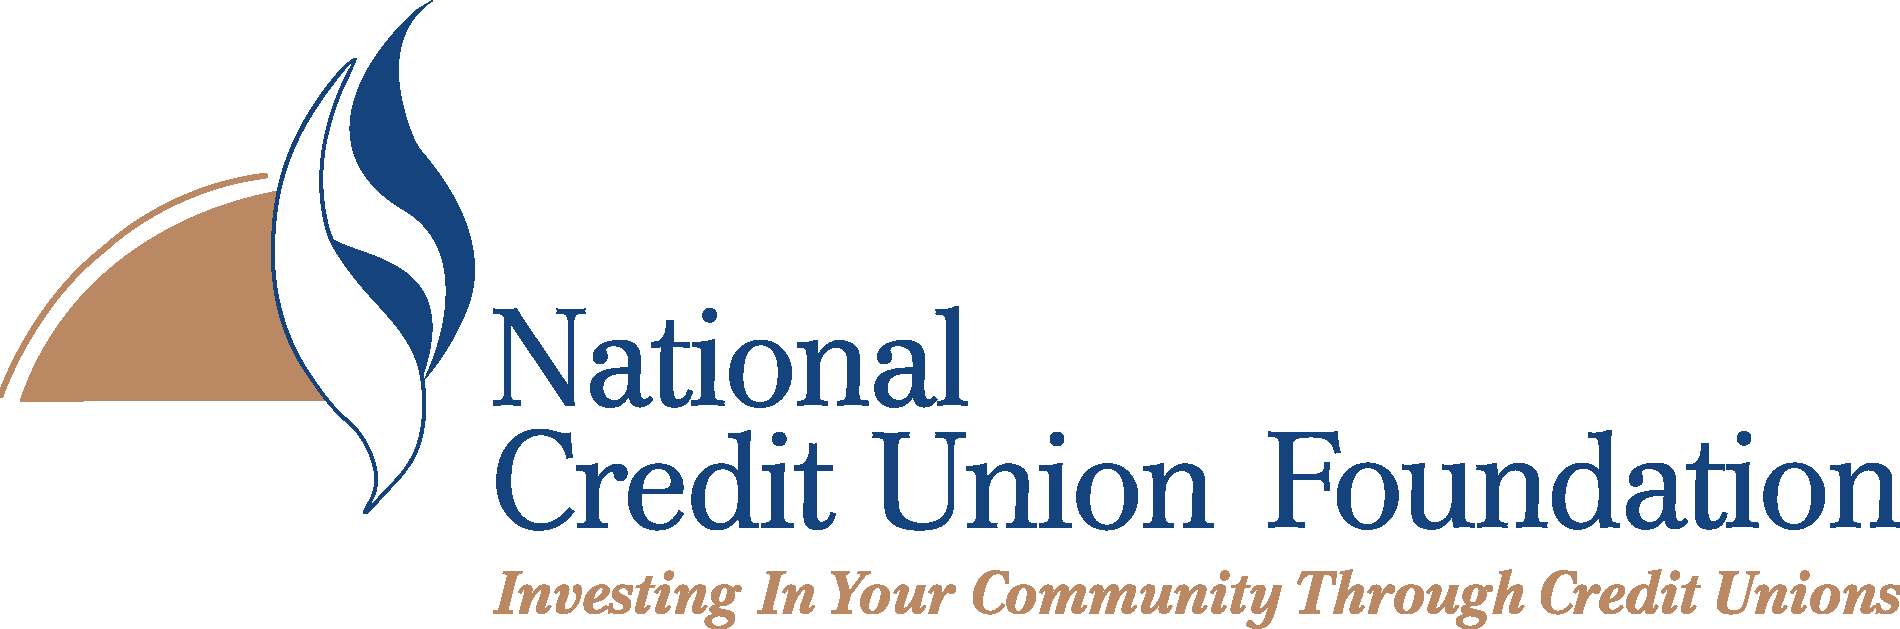 National Credit Union Foundation Logo Vector